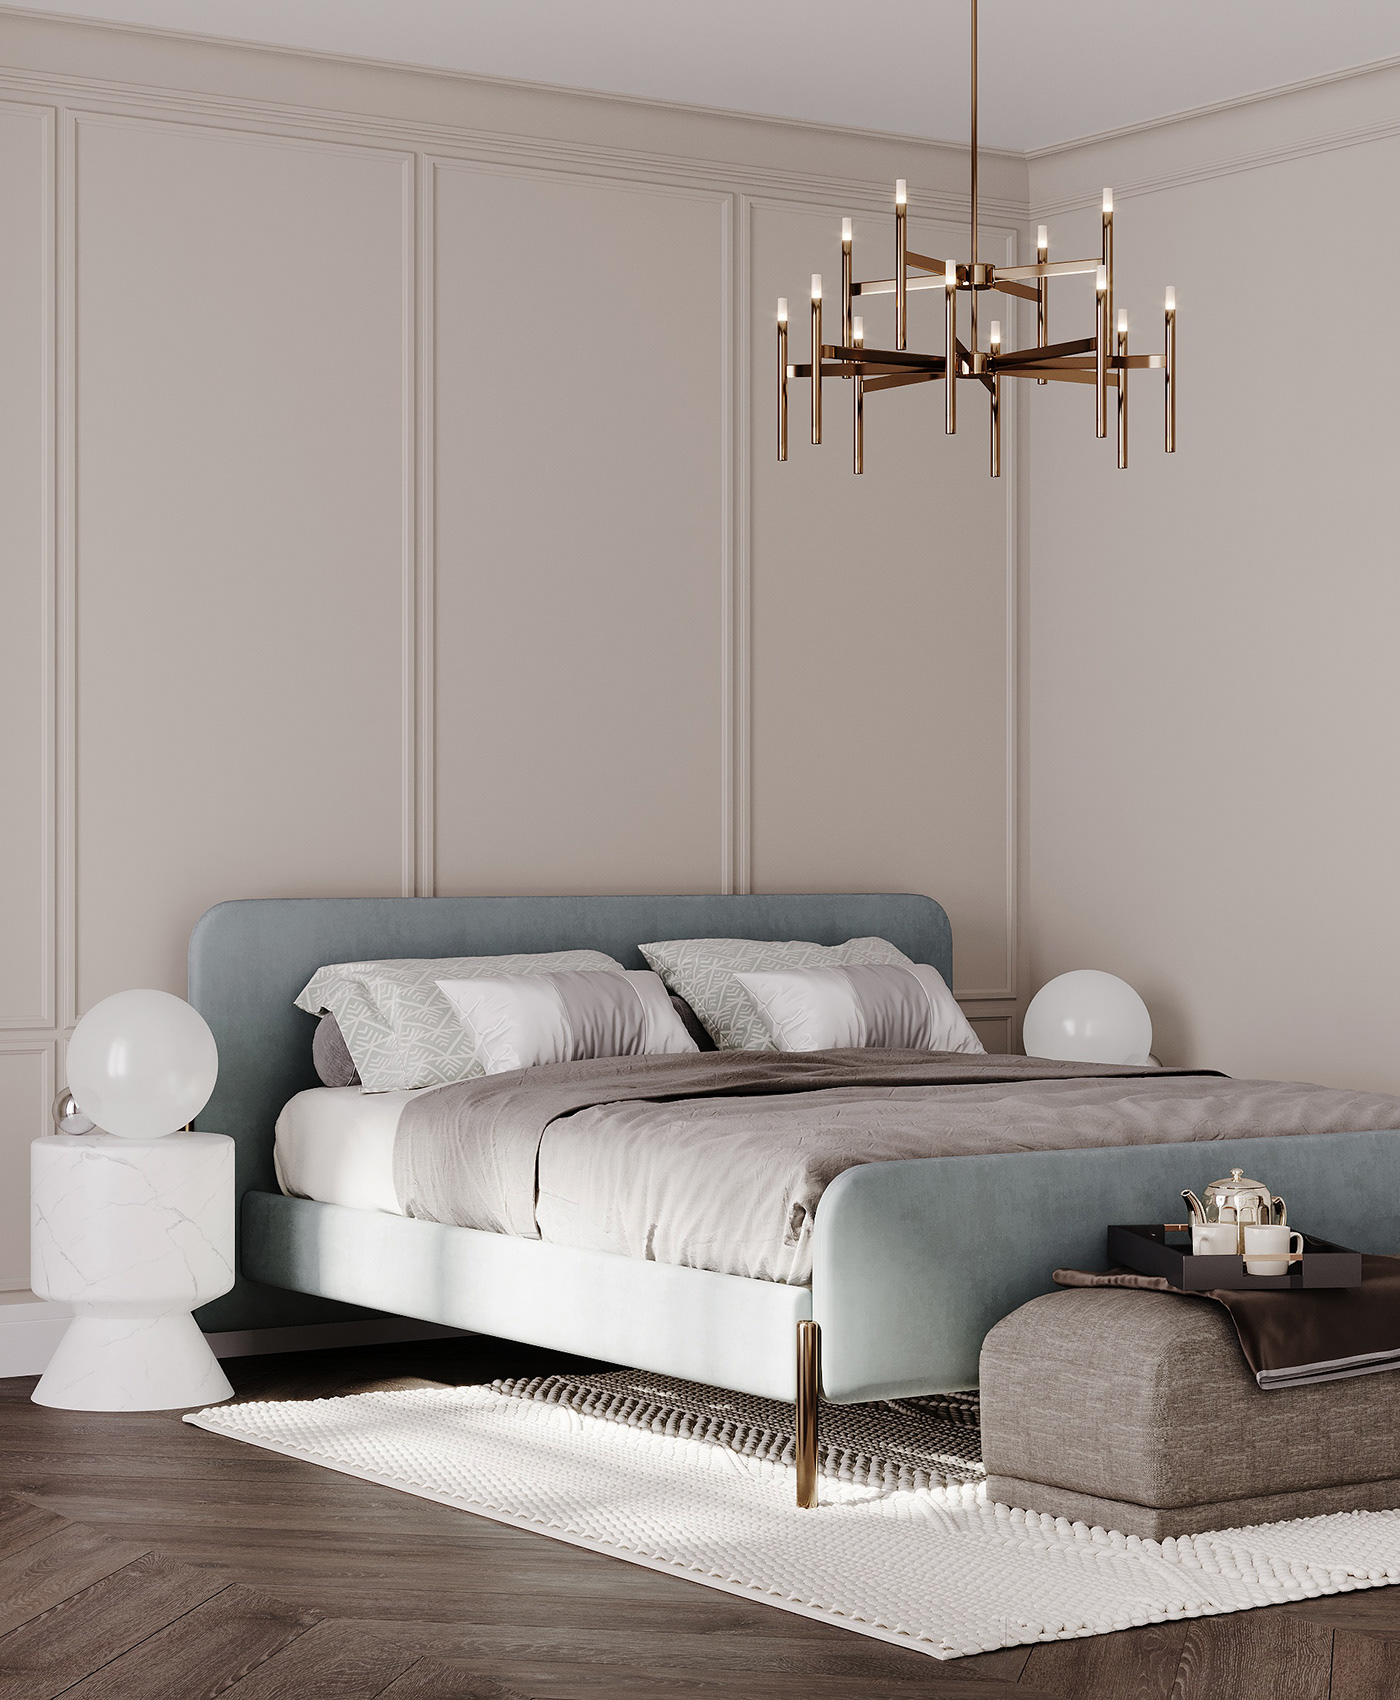 bedroom bedroomdesign bedroominterior brightbedroom interiordesign визуализацияинтерьера дизайнинтерьера   дизайнспальни интерьерспальни светлаяспальня